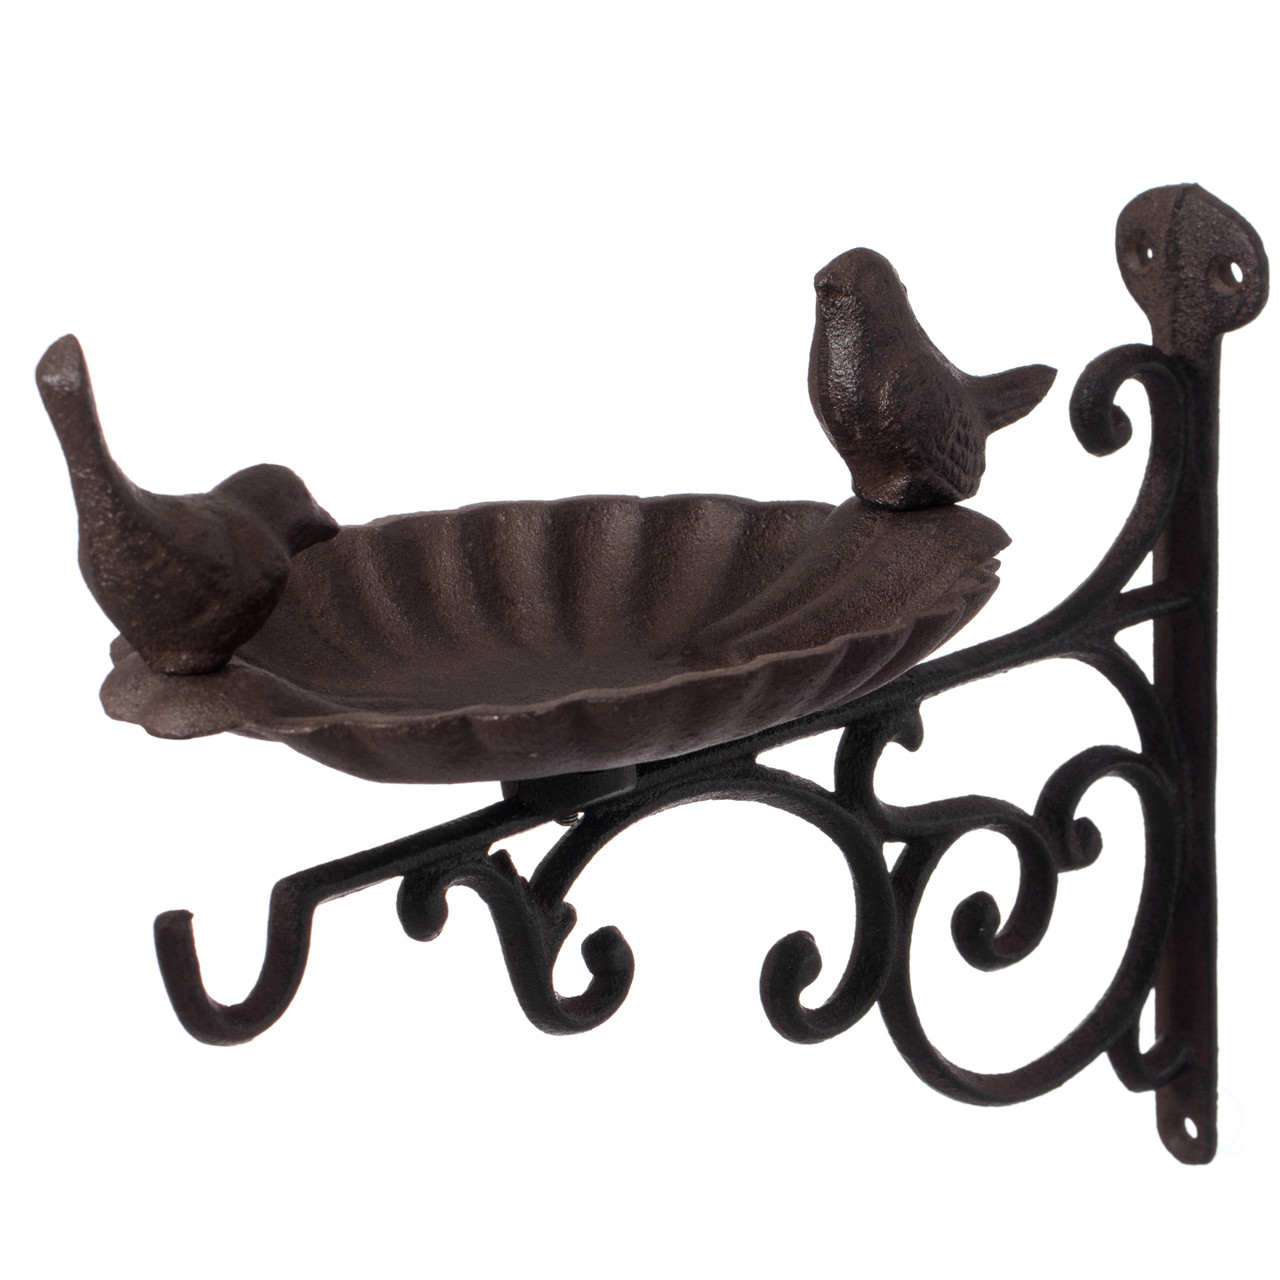 Buy Wholesale QI004530 Outdoor Garden Wall Mounted Hanging Iron Bird Bath  and Feeder Decor, Bronze